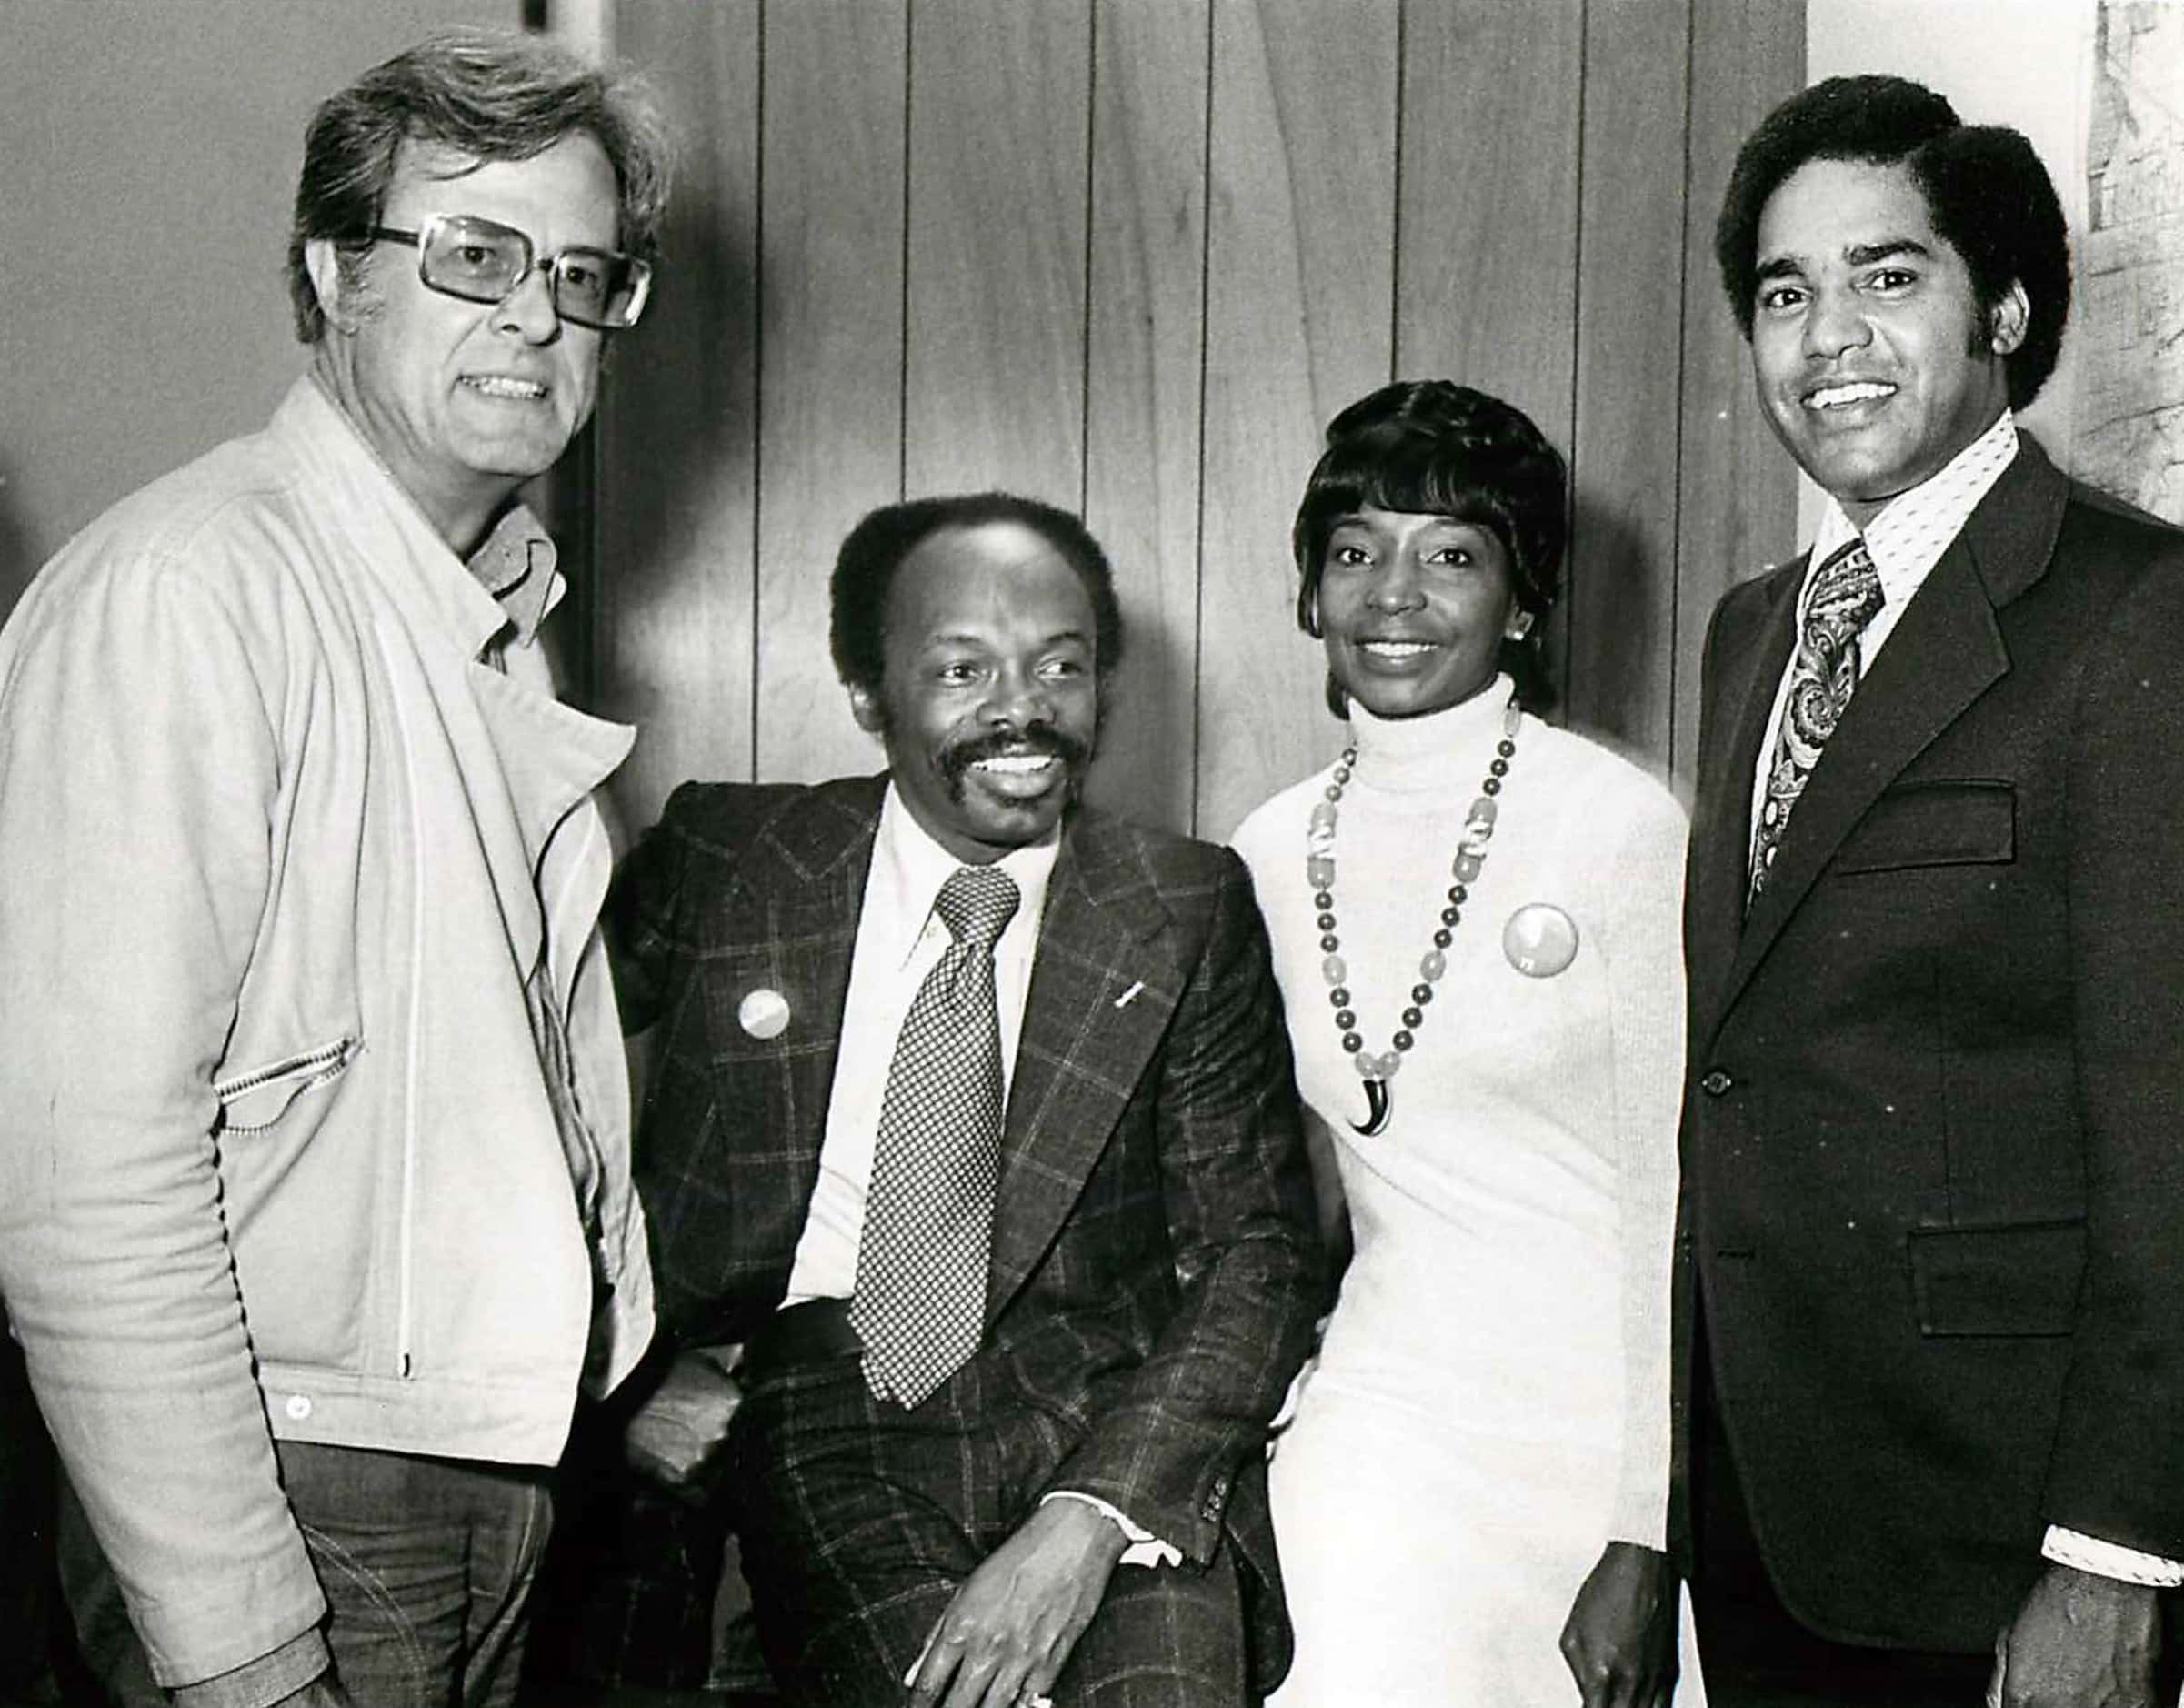 From left: Robert Culp, Willie Brown, Eddie Bernice Johnson and Sam Hudson circa 1972.